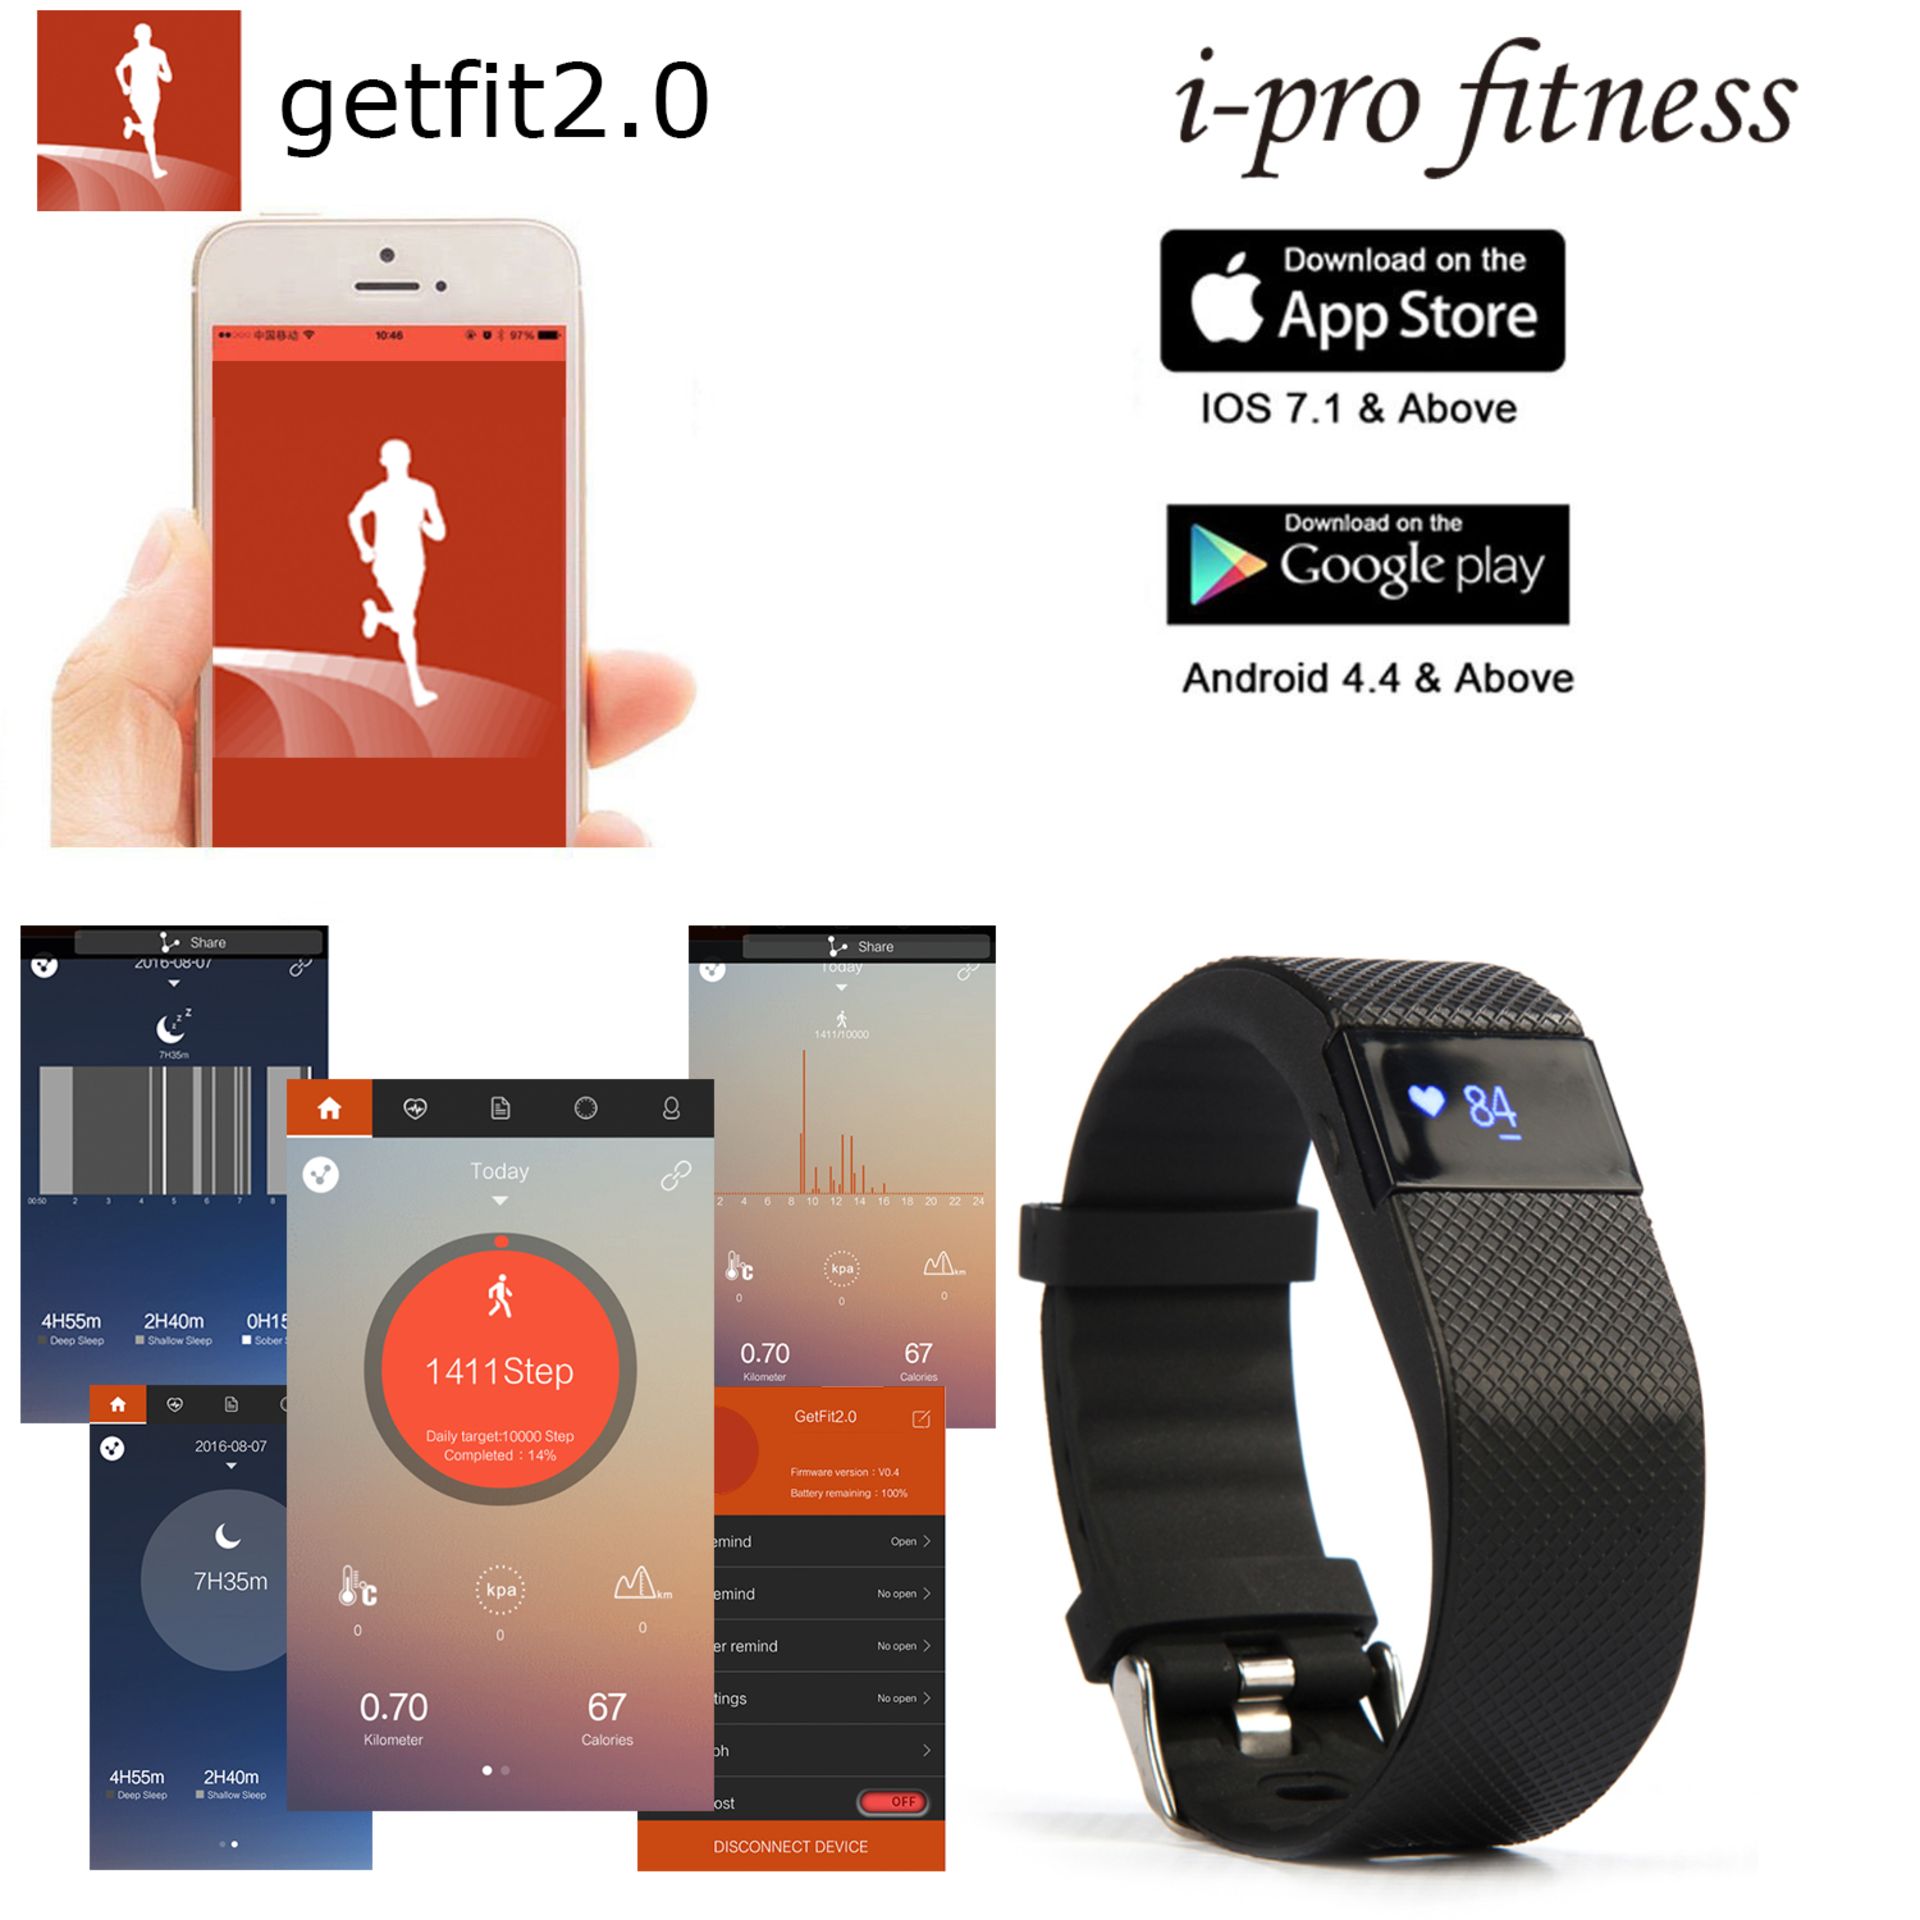 10x Fitness Tracker i-pro fitness, Bluetooth 4.0 Sports Smart Bracelet, Heart Rate Monitor, - Image 5 of 6